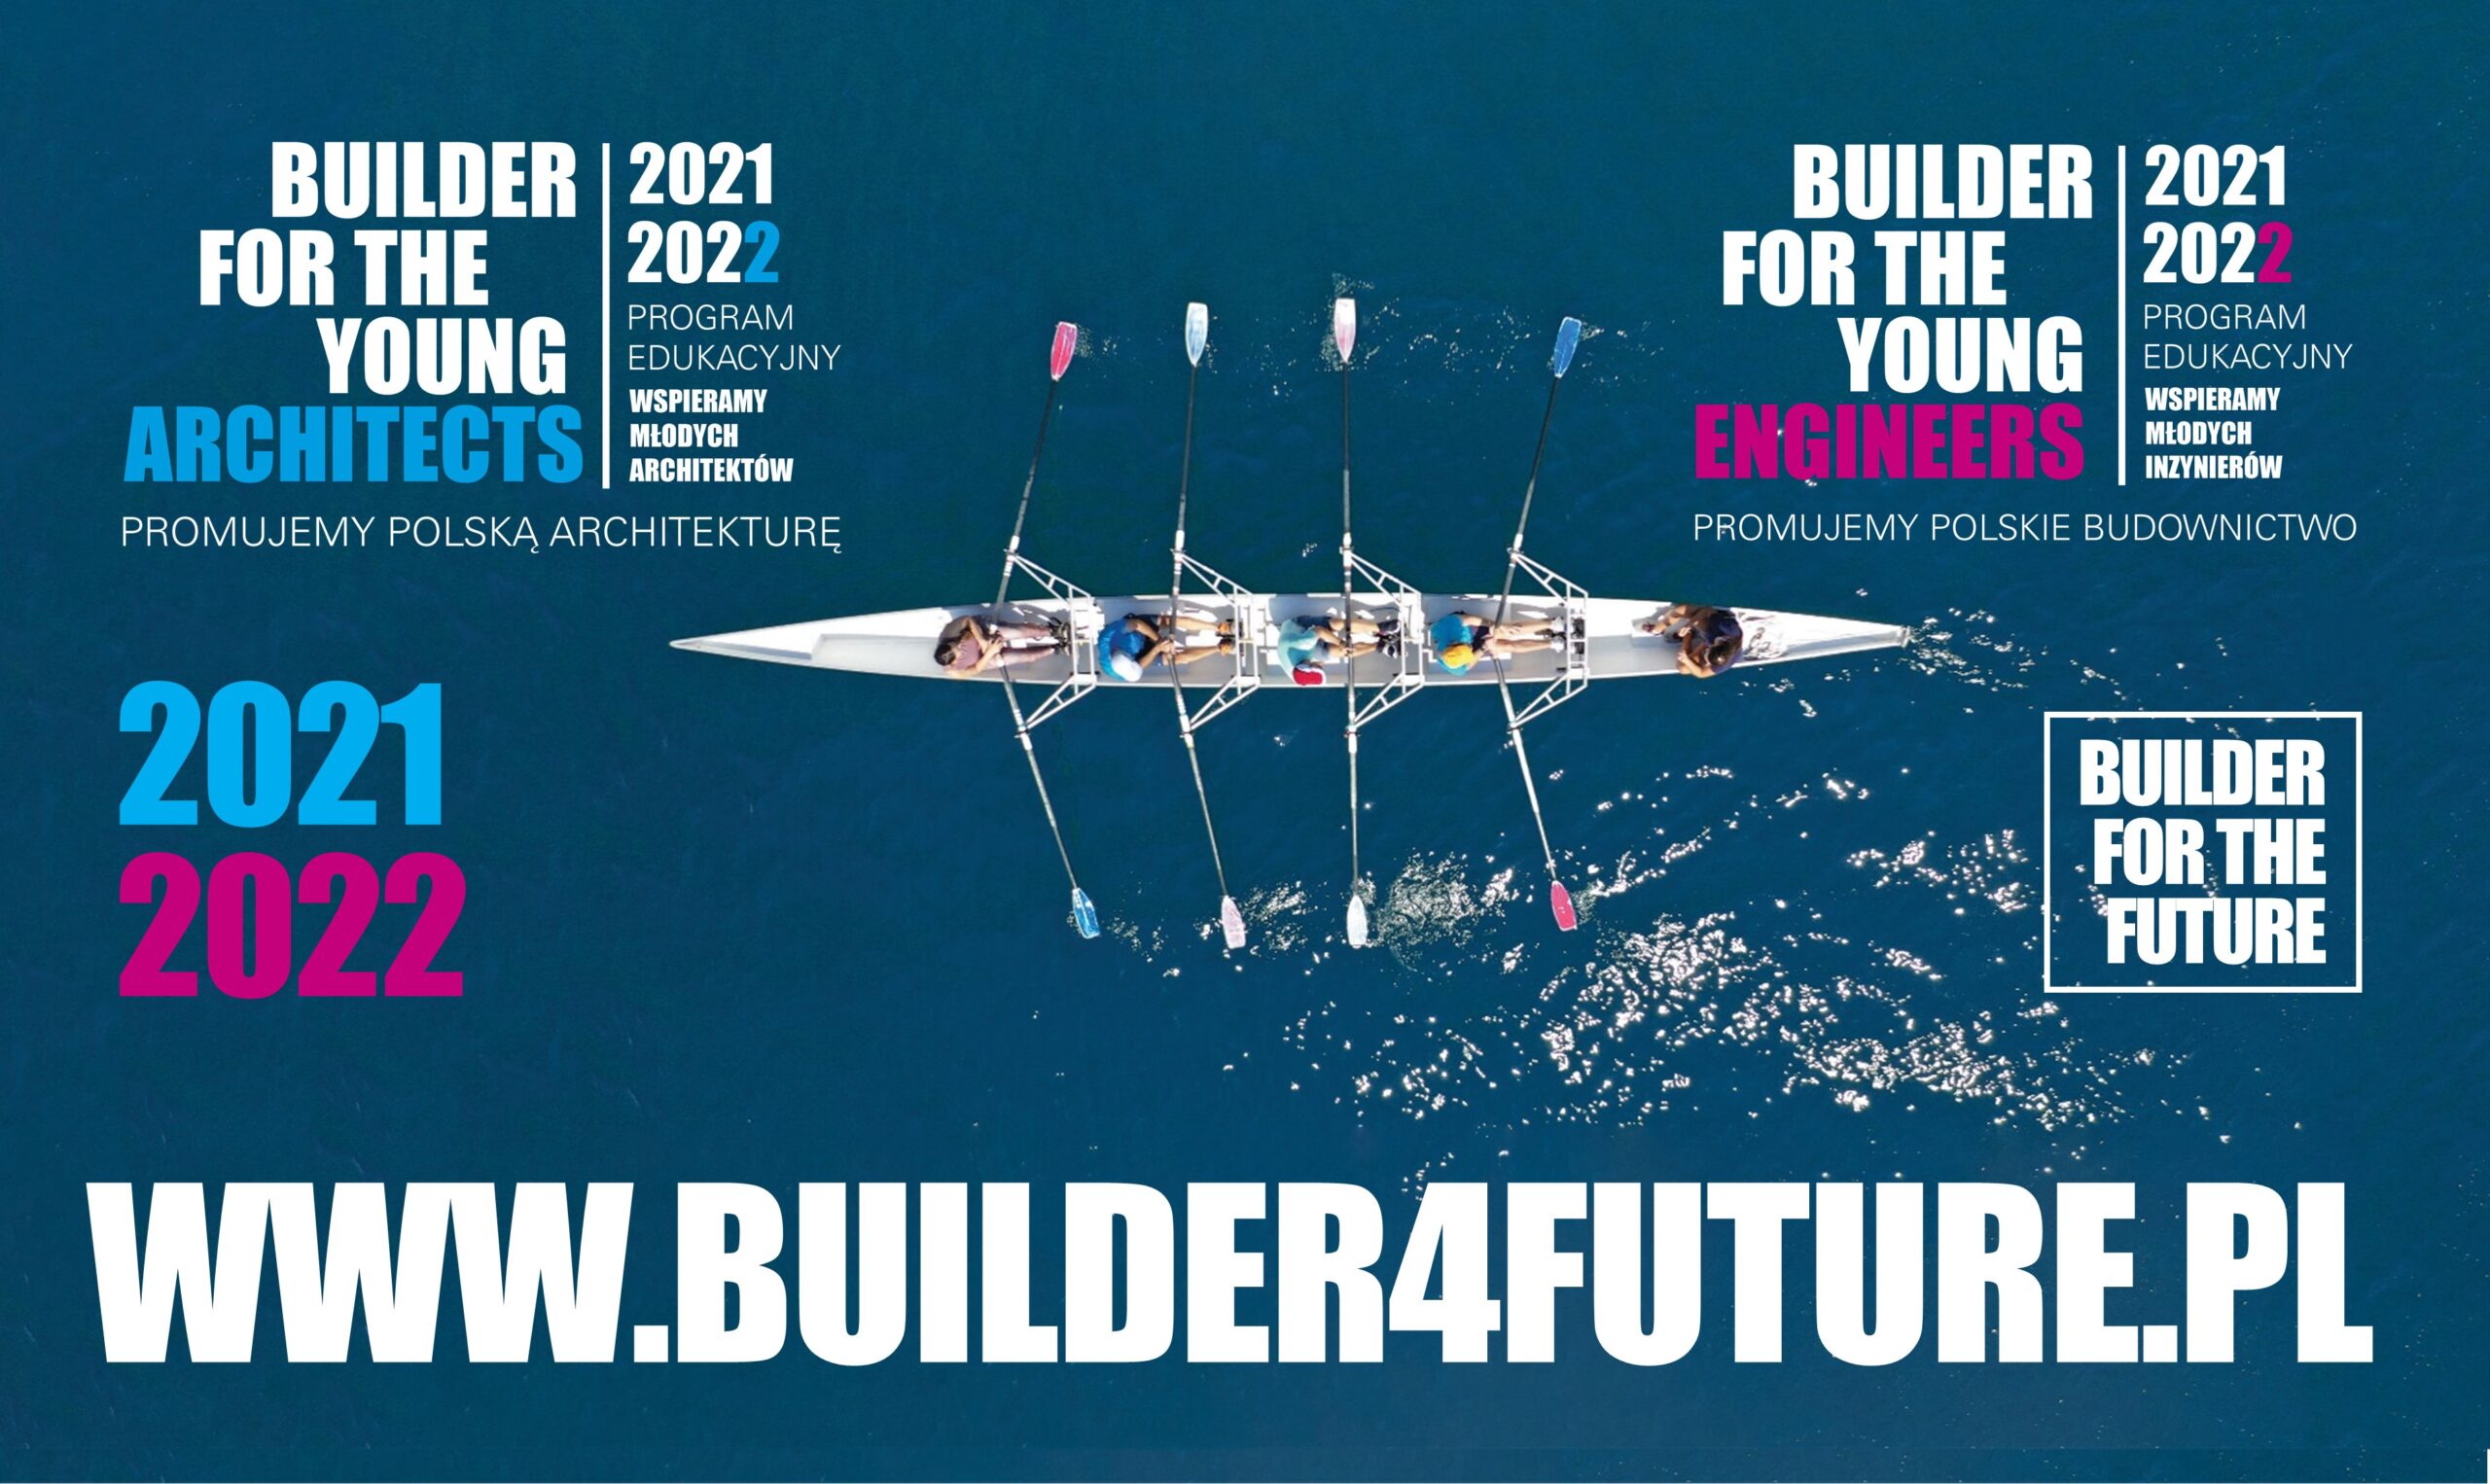 PROGRAM BUILDER FOR THE FUTURE EDYCJA 2021-2022